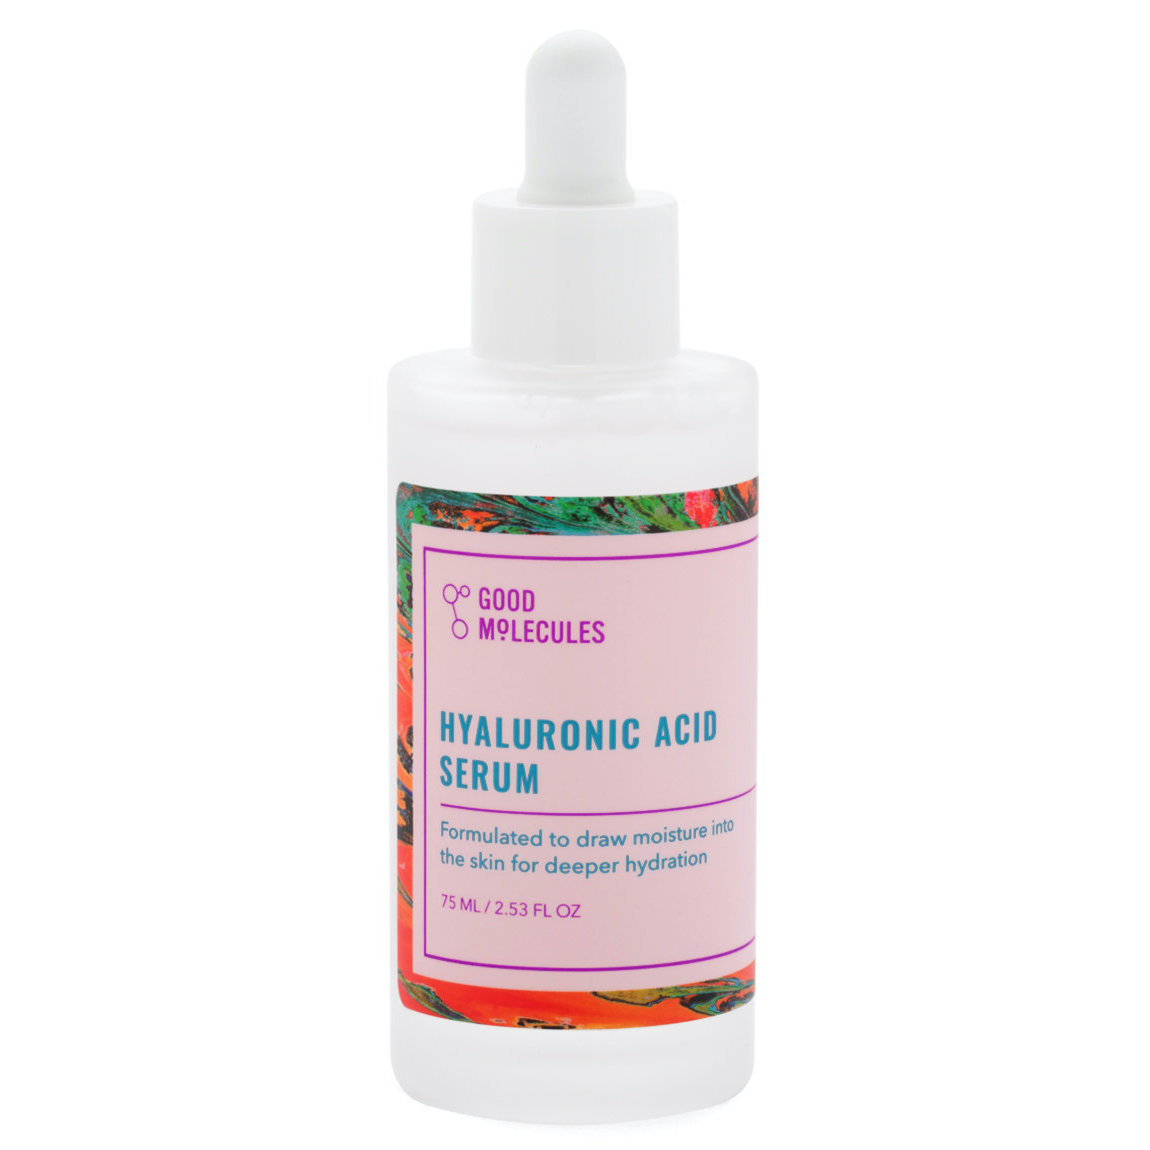 Good Molecules Hyaluronic Acid Serum 75 ml (Jumbo Size) alternative view 1 - product swatch.